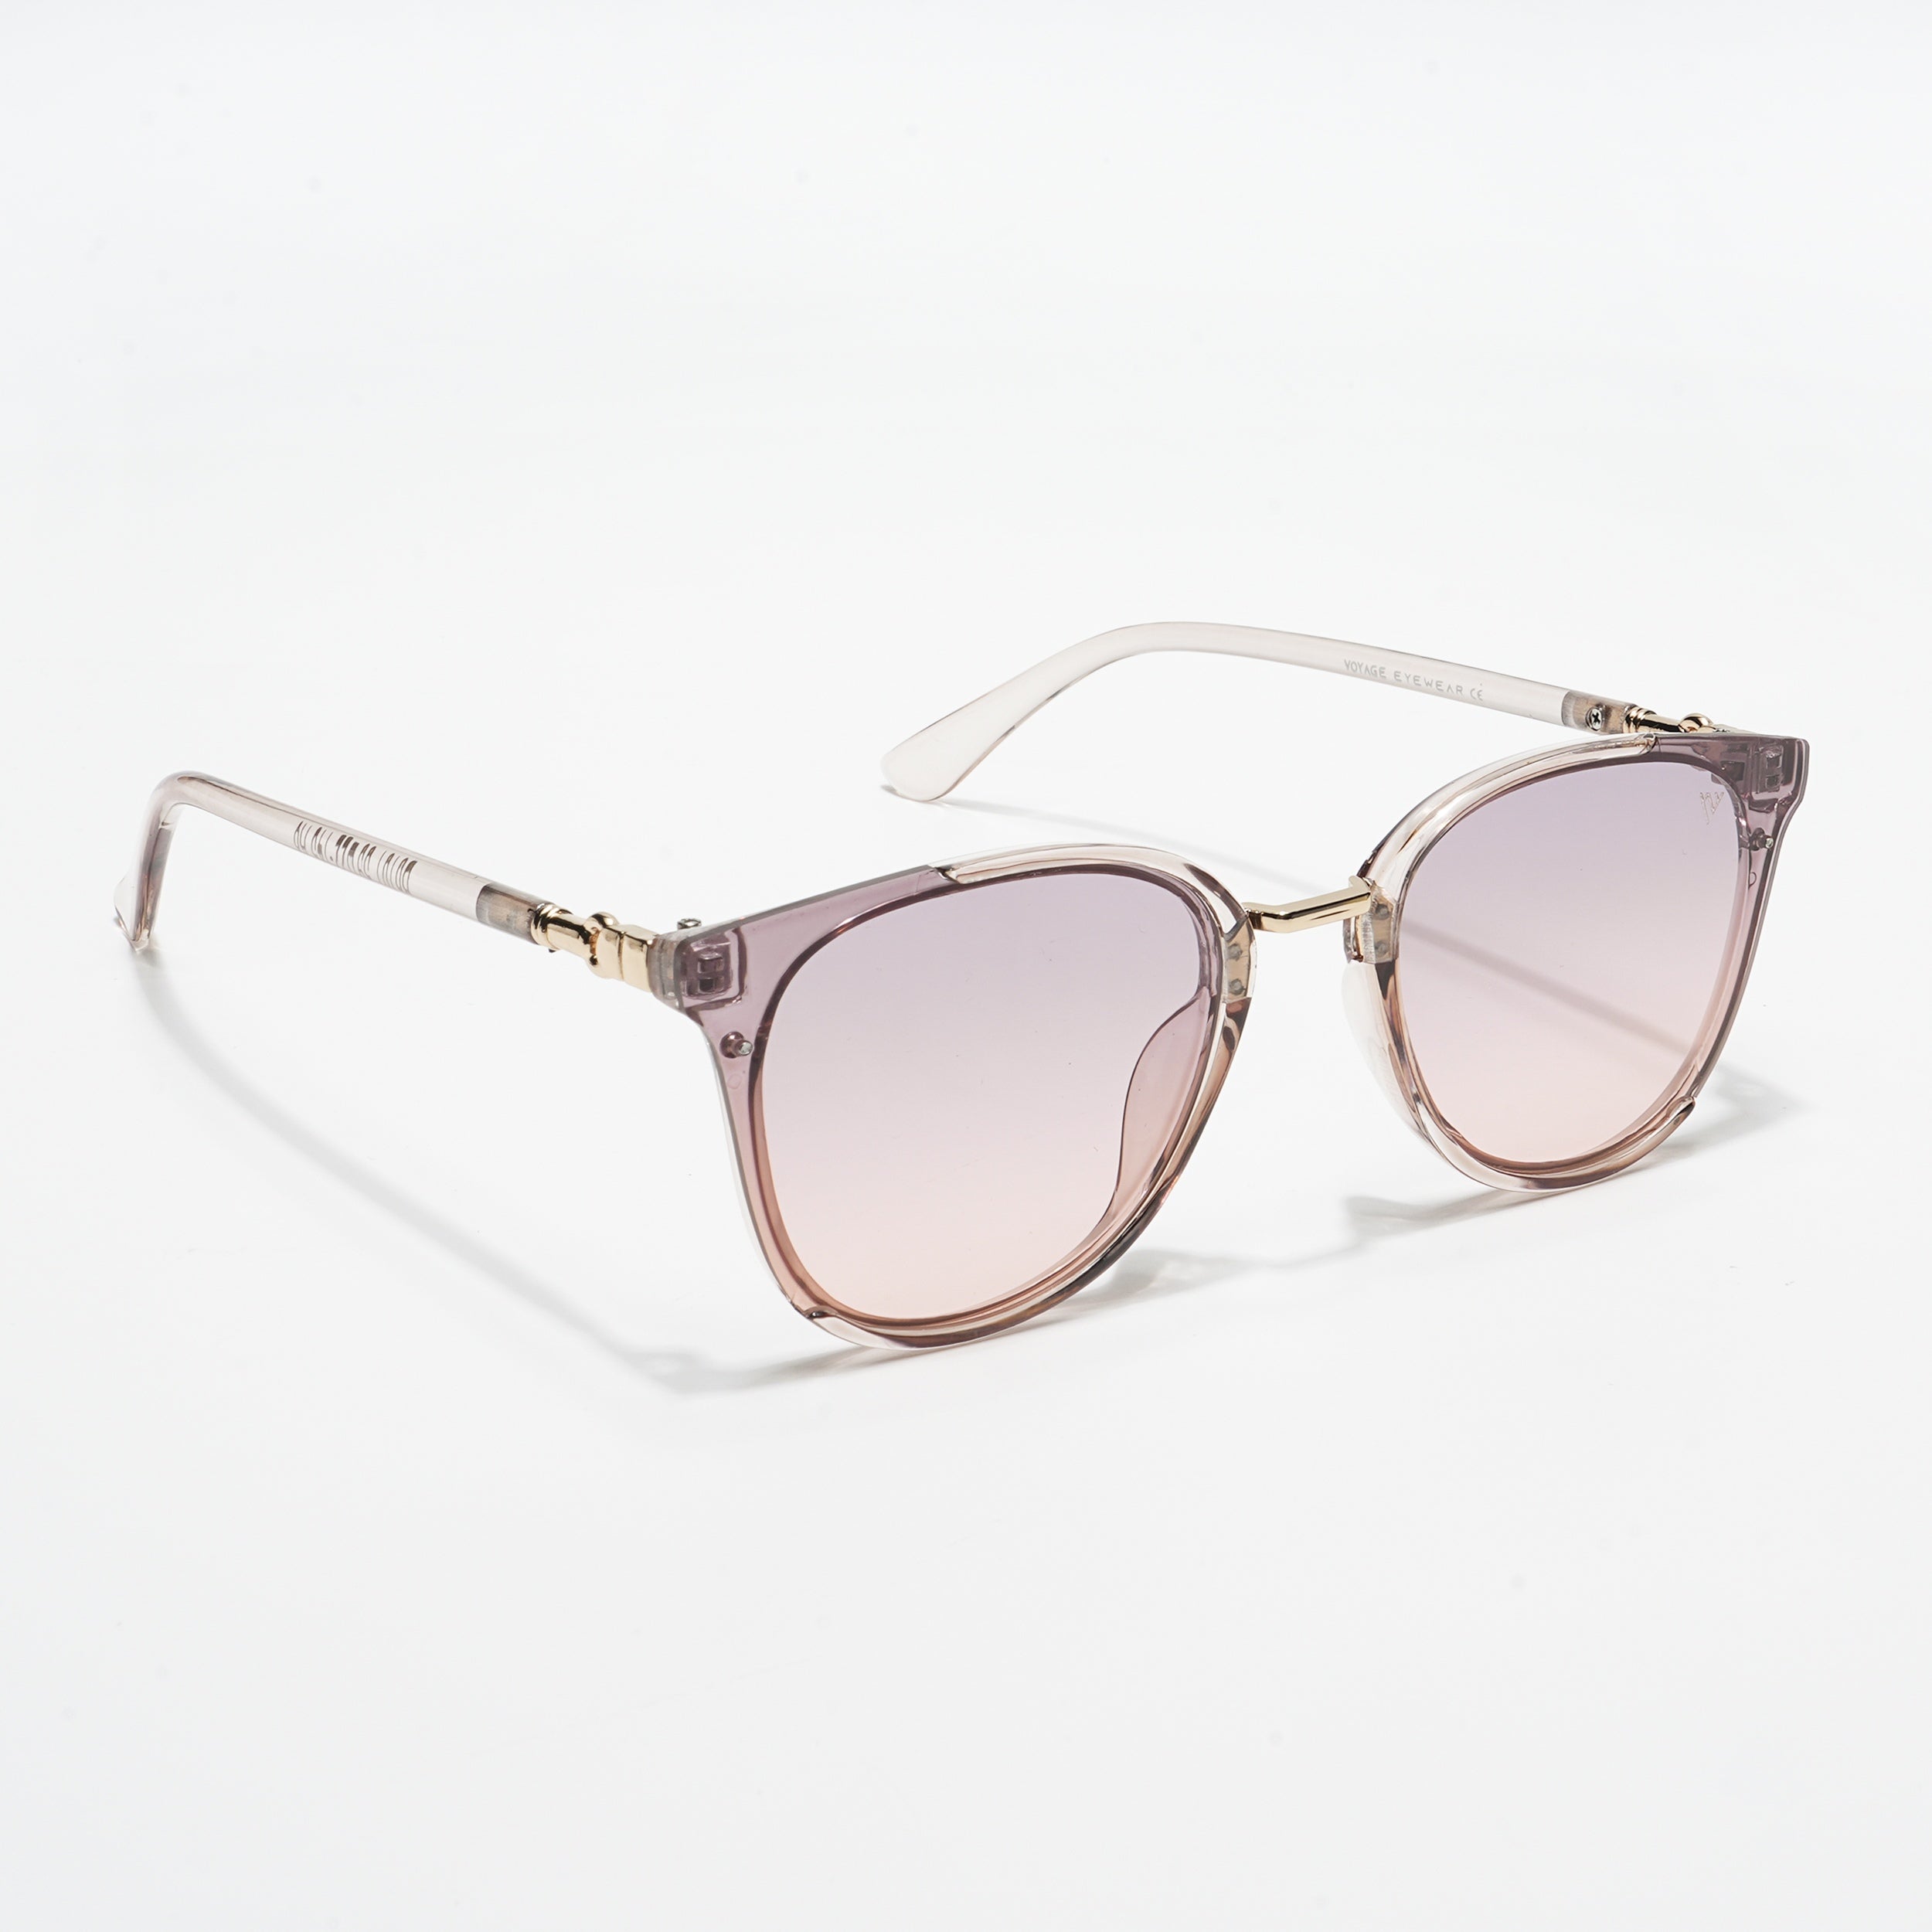 Voyage Cateye Sunglasses for Women (Pink & Grey Lens | Light Pink & Golden Frame - MG3174)